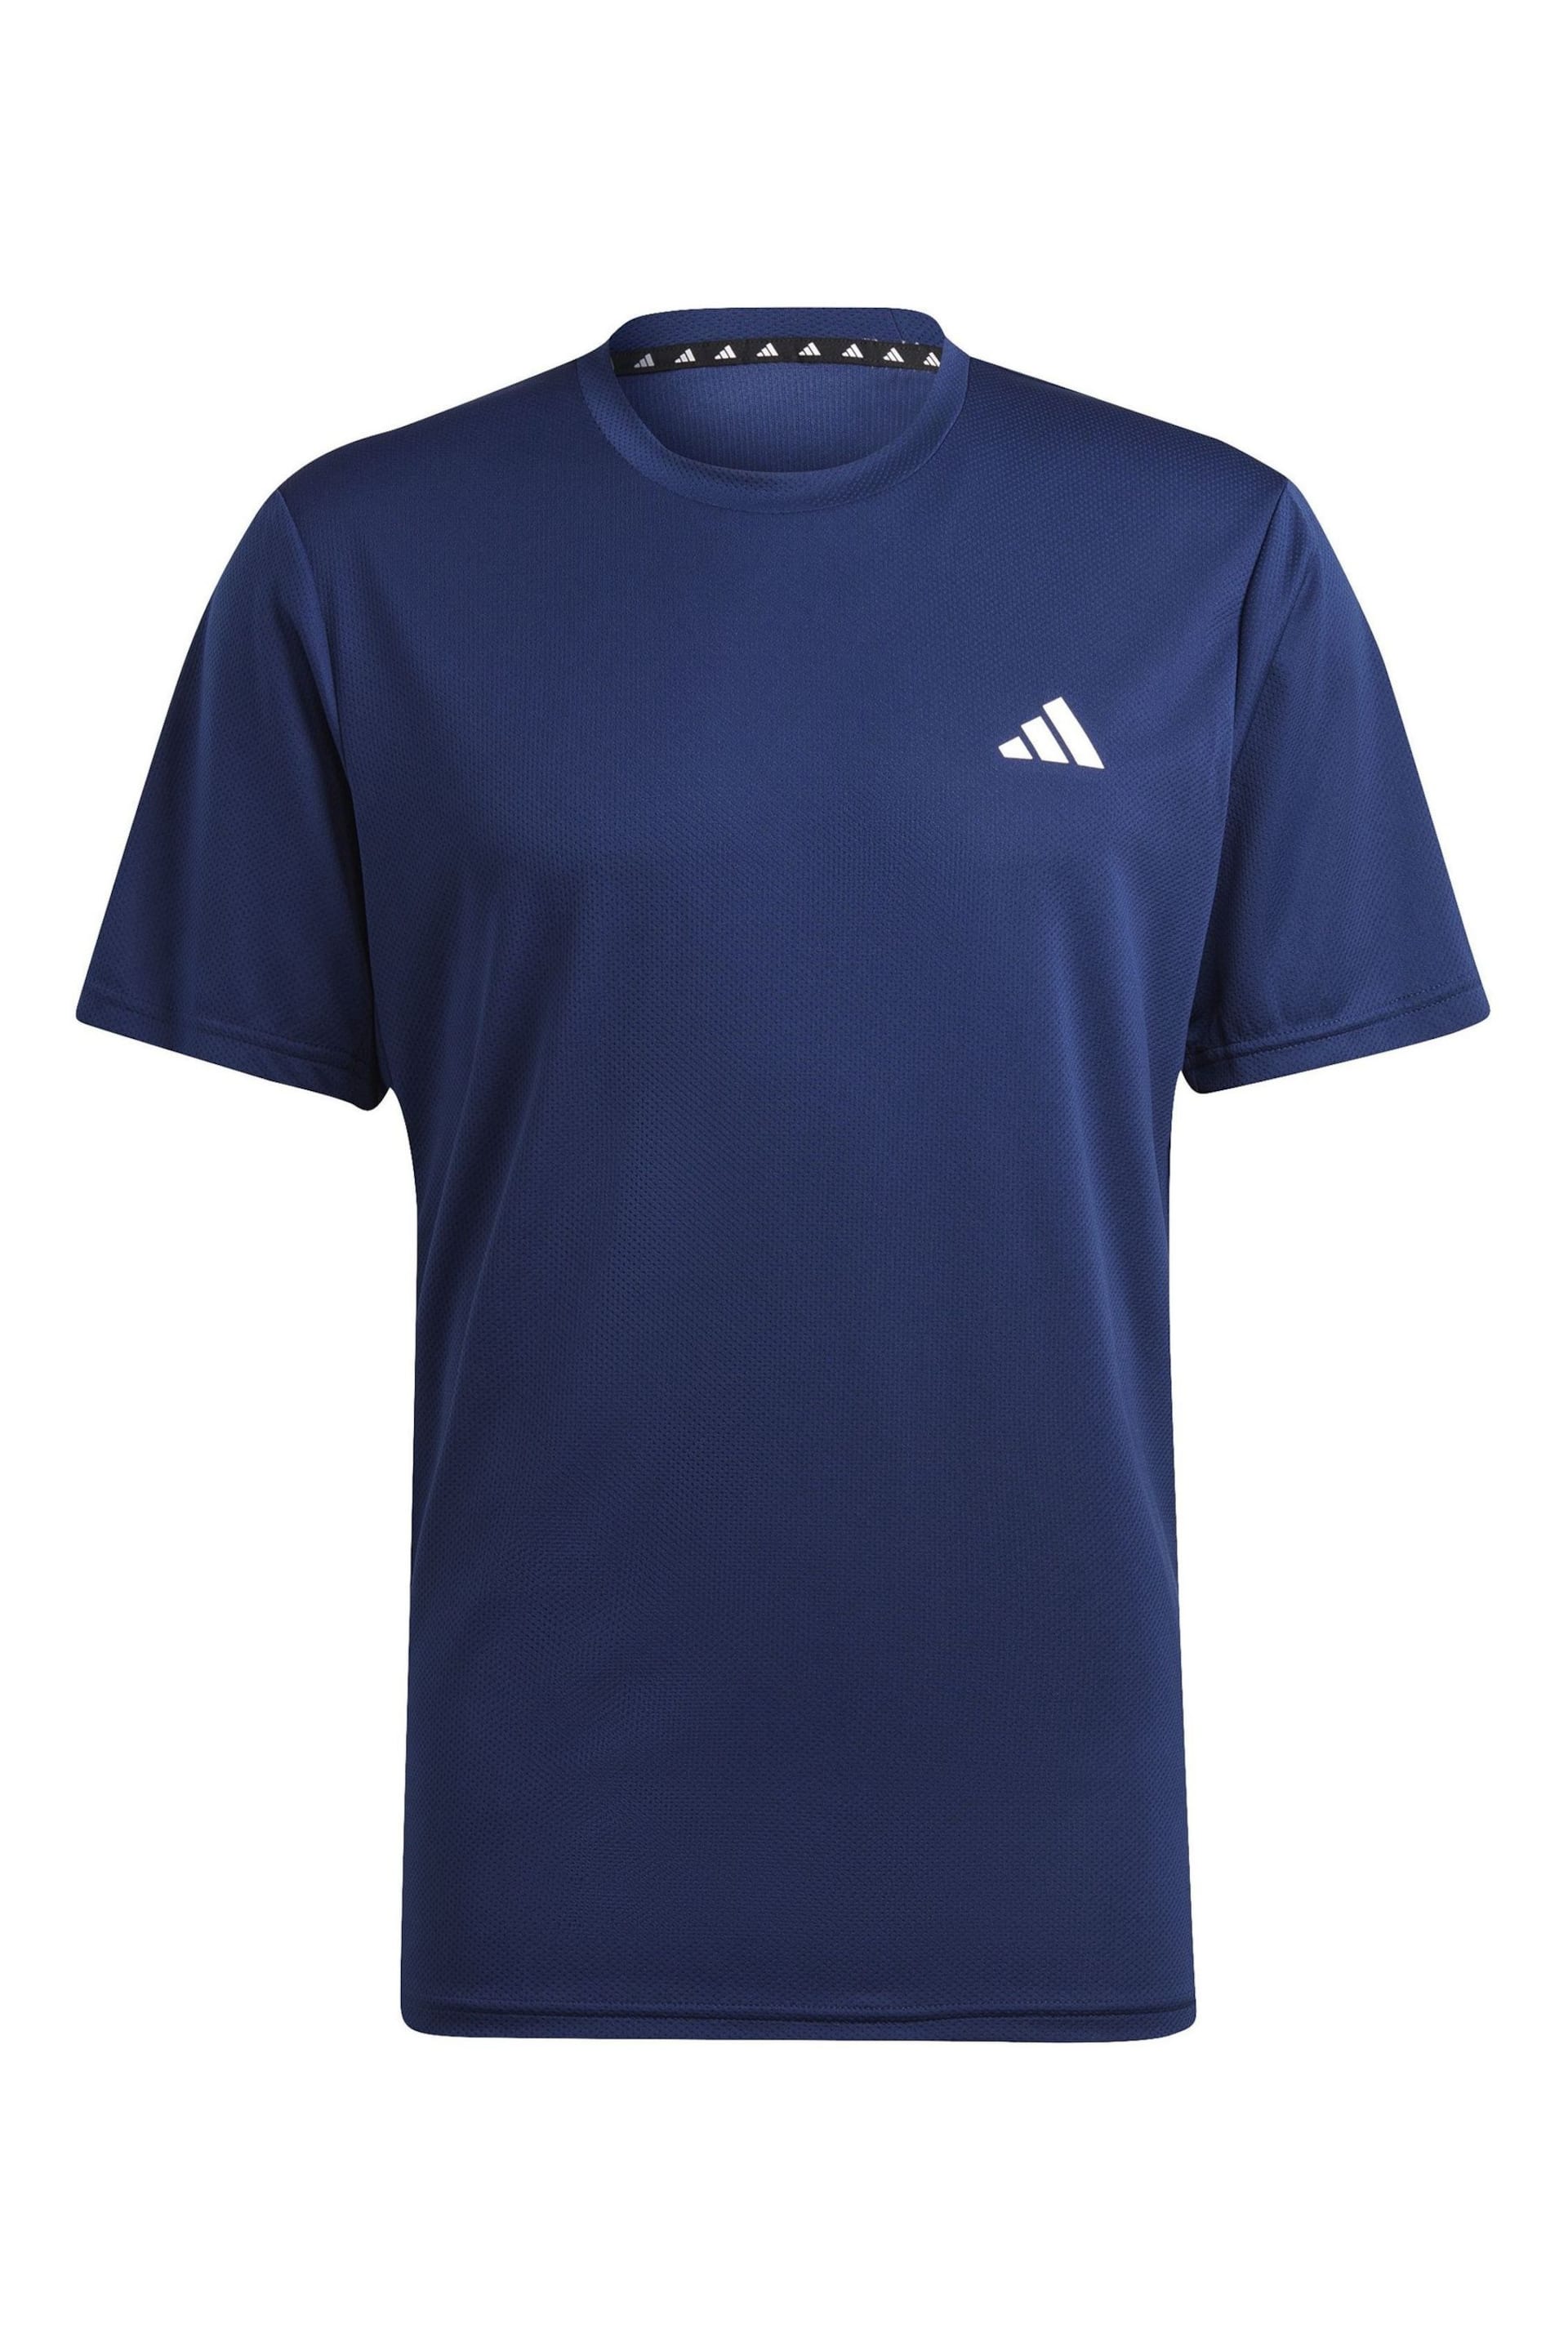 adidas Navy Blue Train Essentials Training T-Shirt - Image 6 of 6